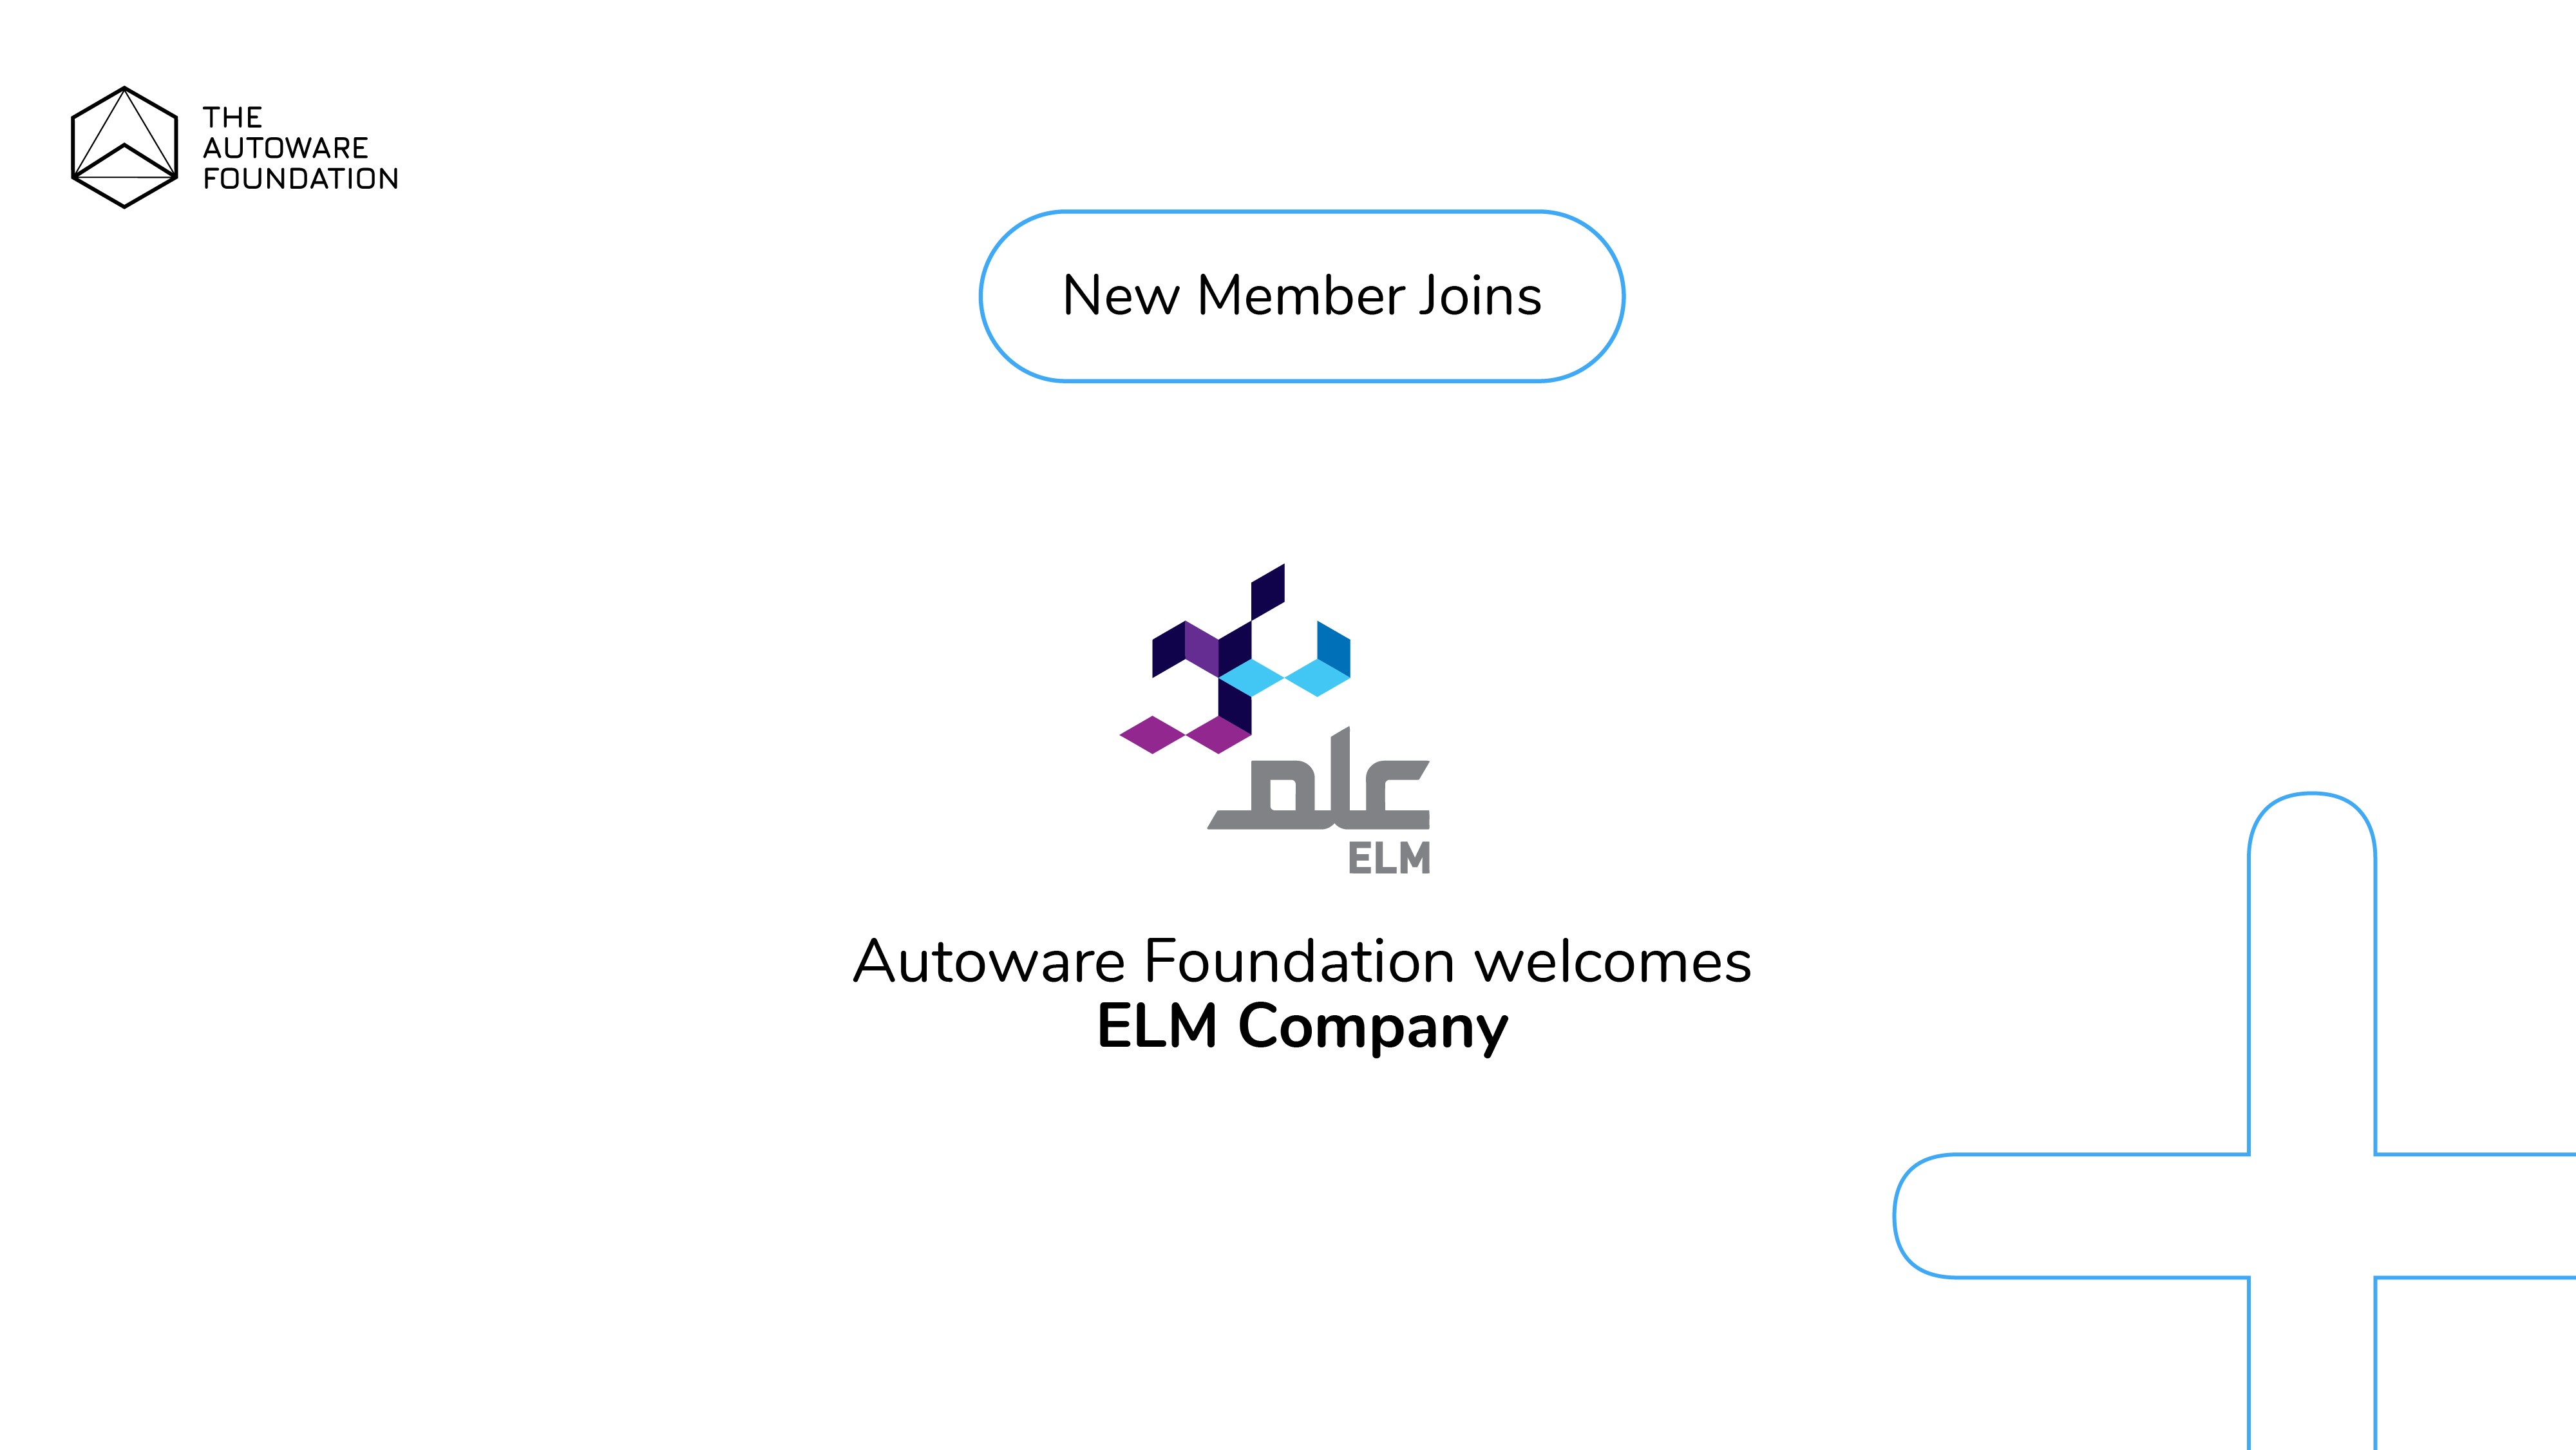 ELM Company joins the Autoware Foundation